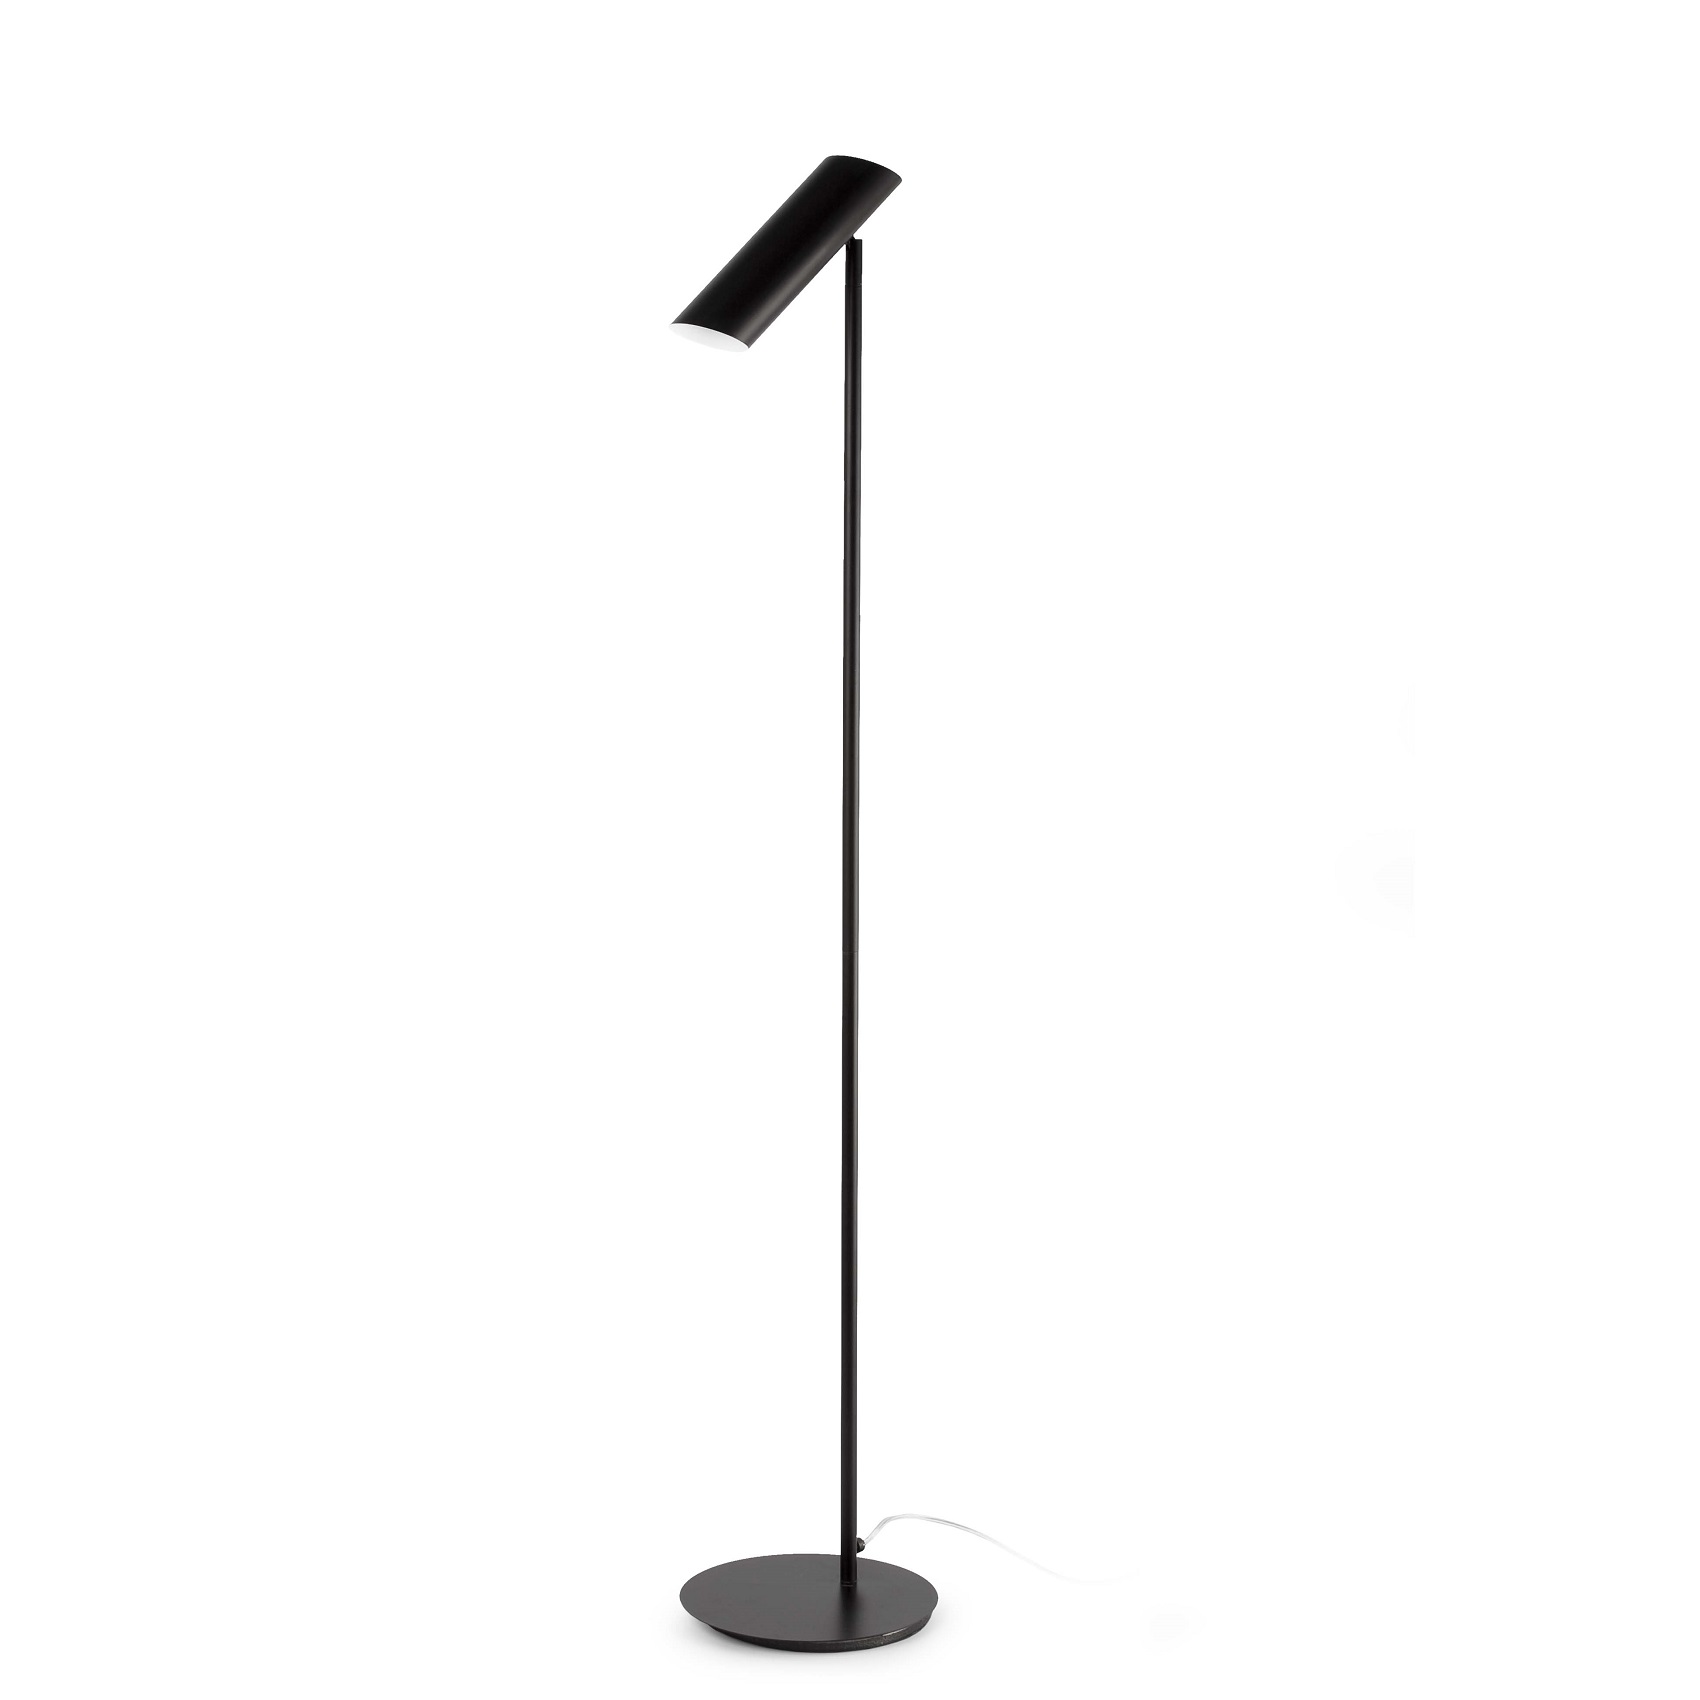 Lampadaire design Link de Faro, lampadaire noir GU10